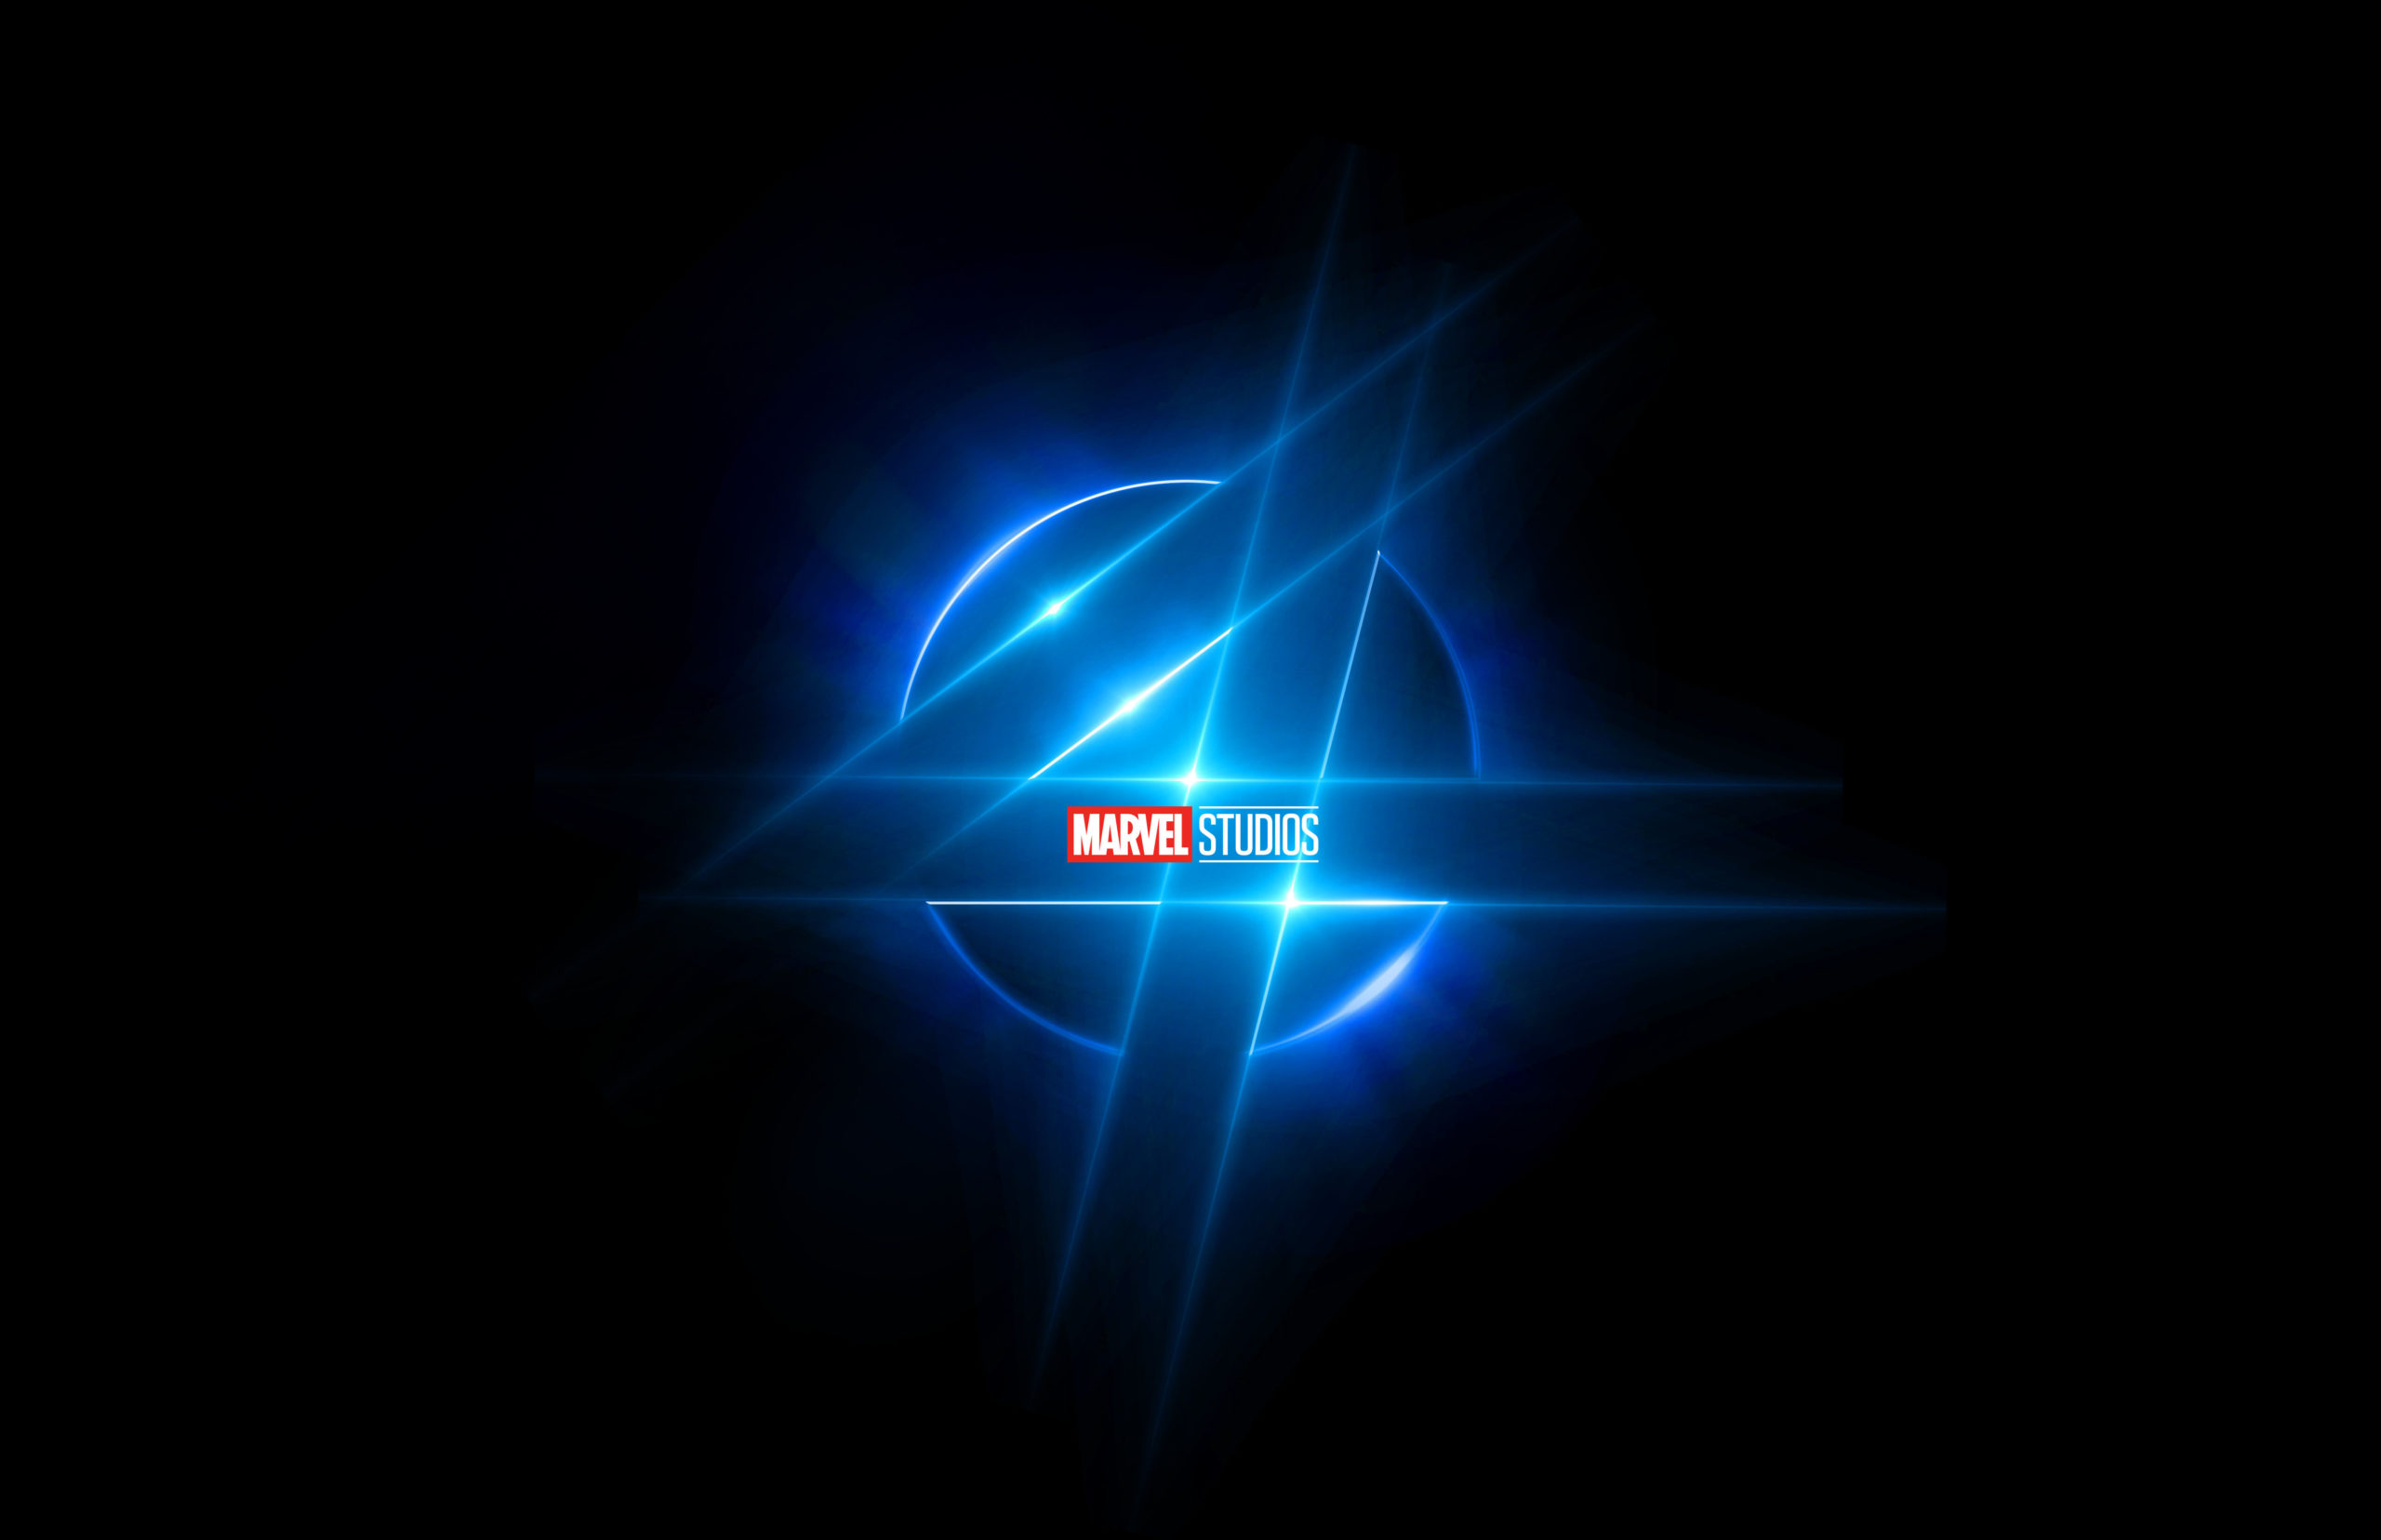 More Fantastic Four Rumors Including Possible Delay | Barside Buzz